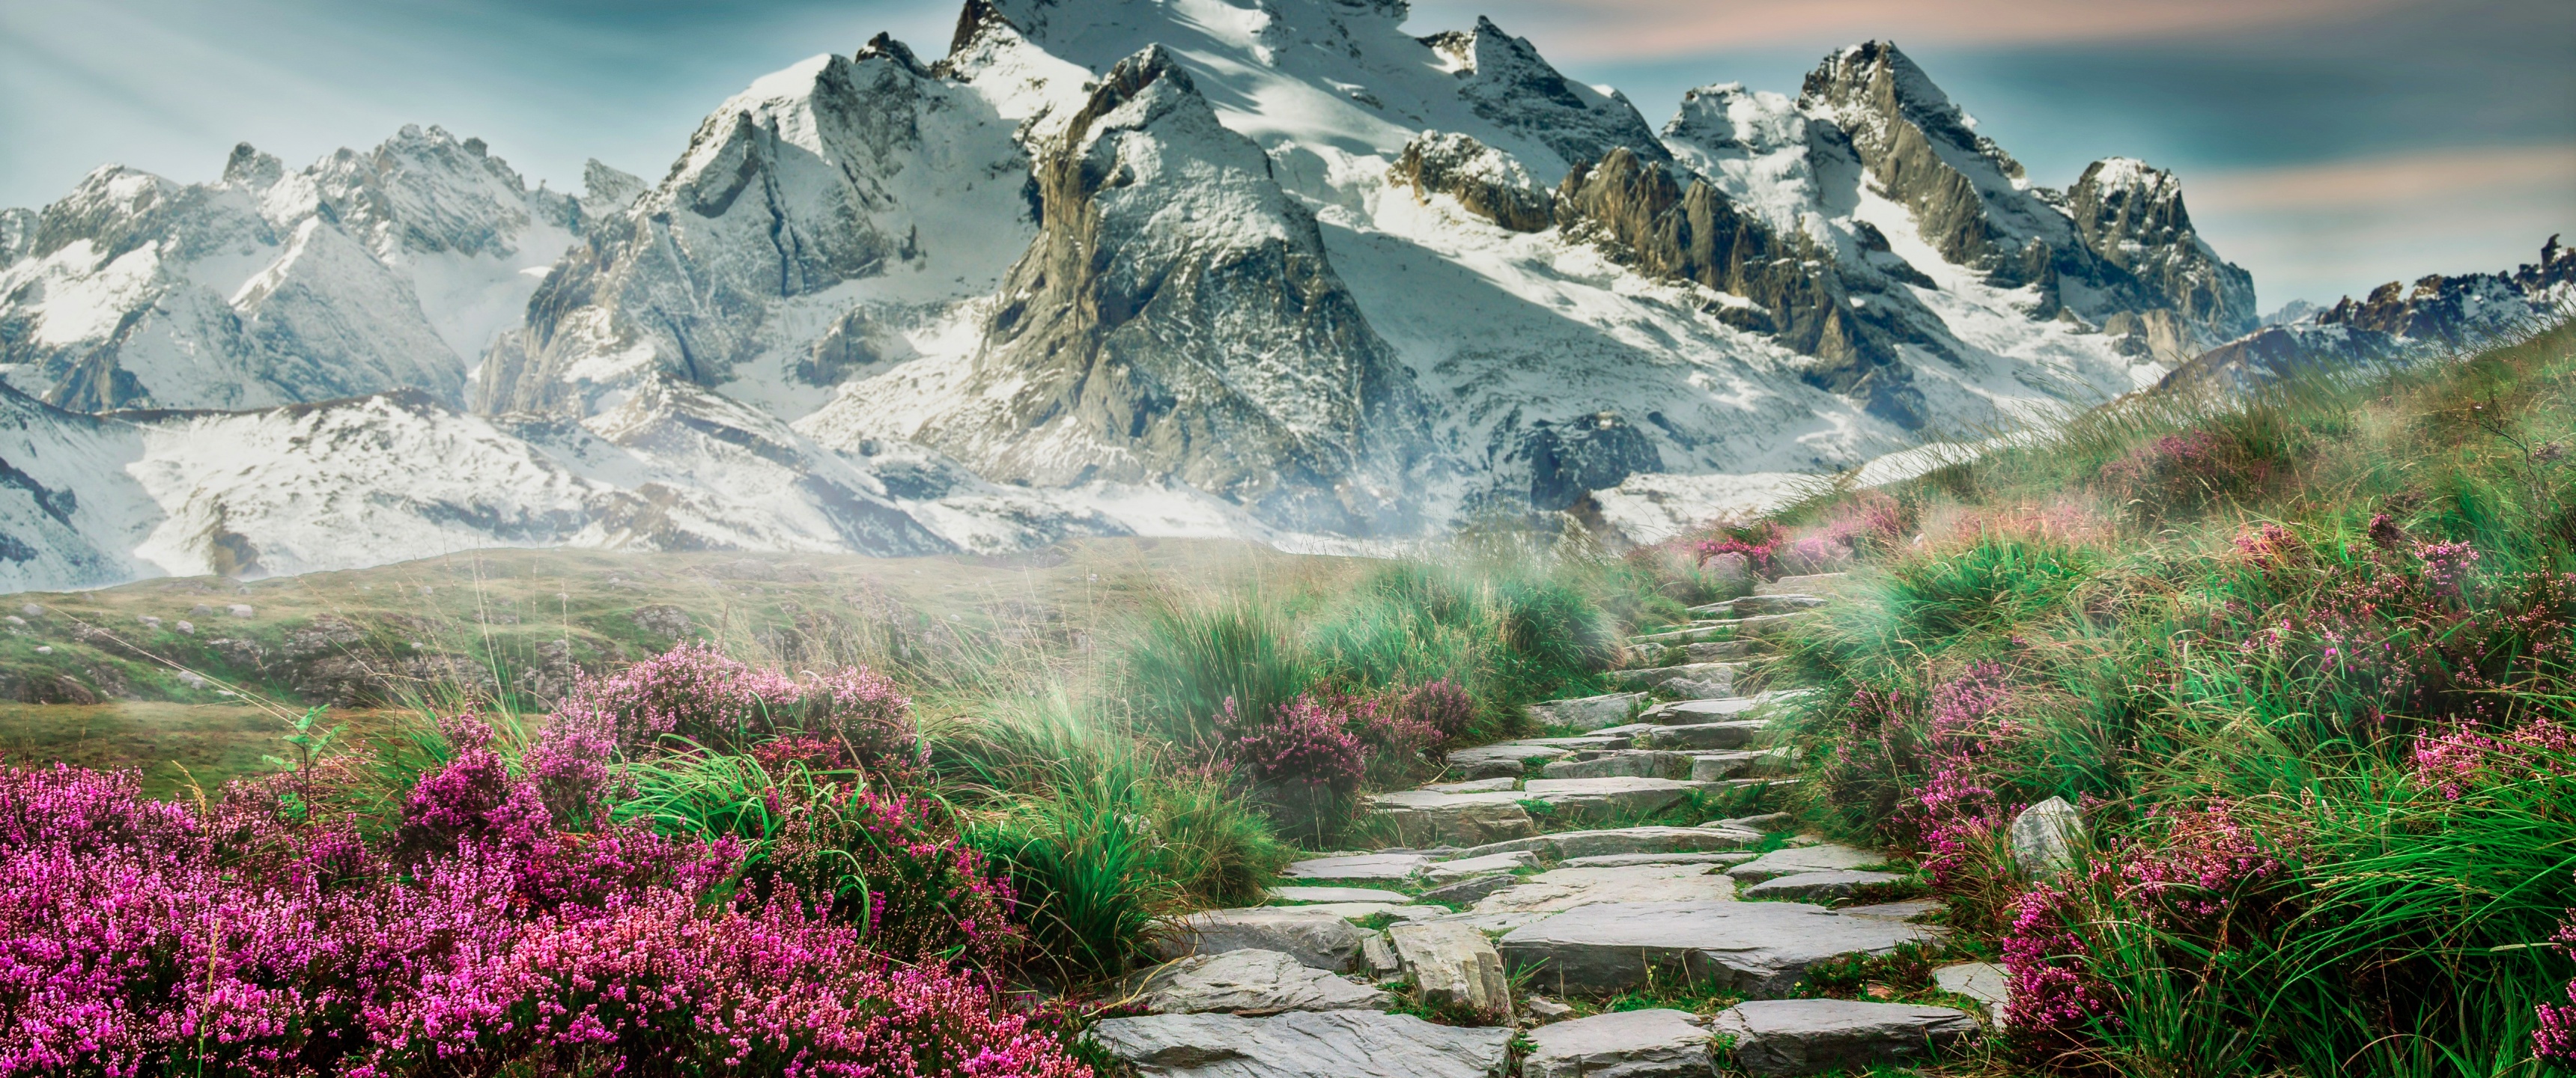 beautiful mountain landscape wallpapers